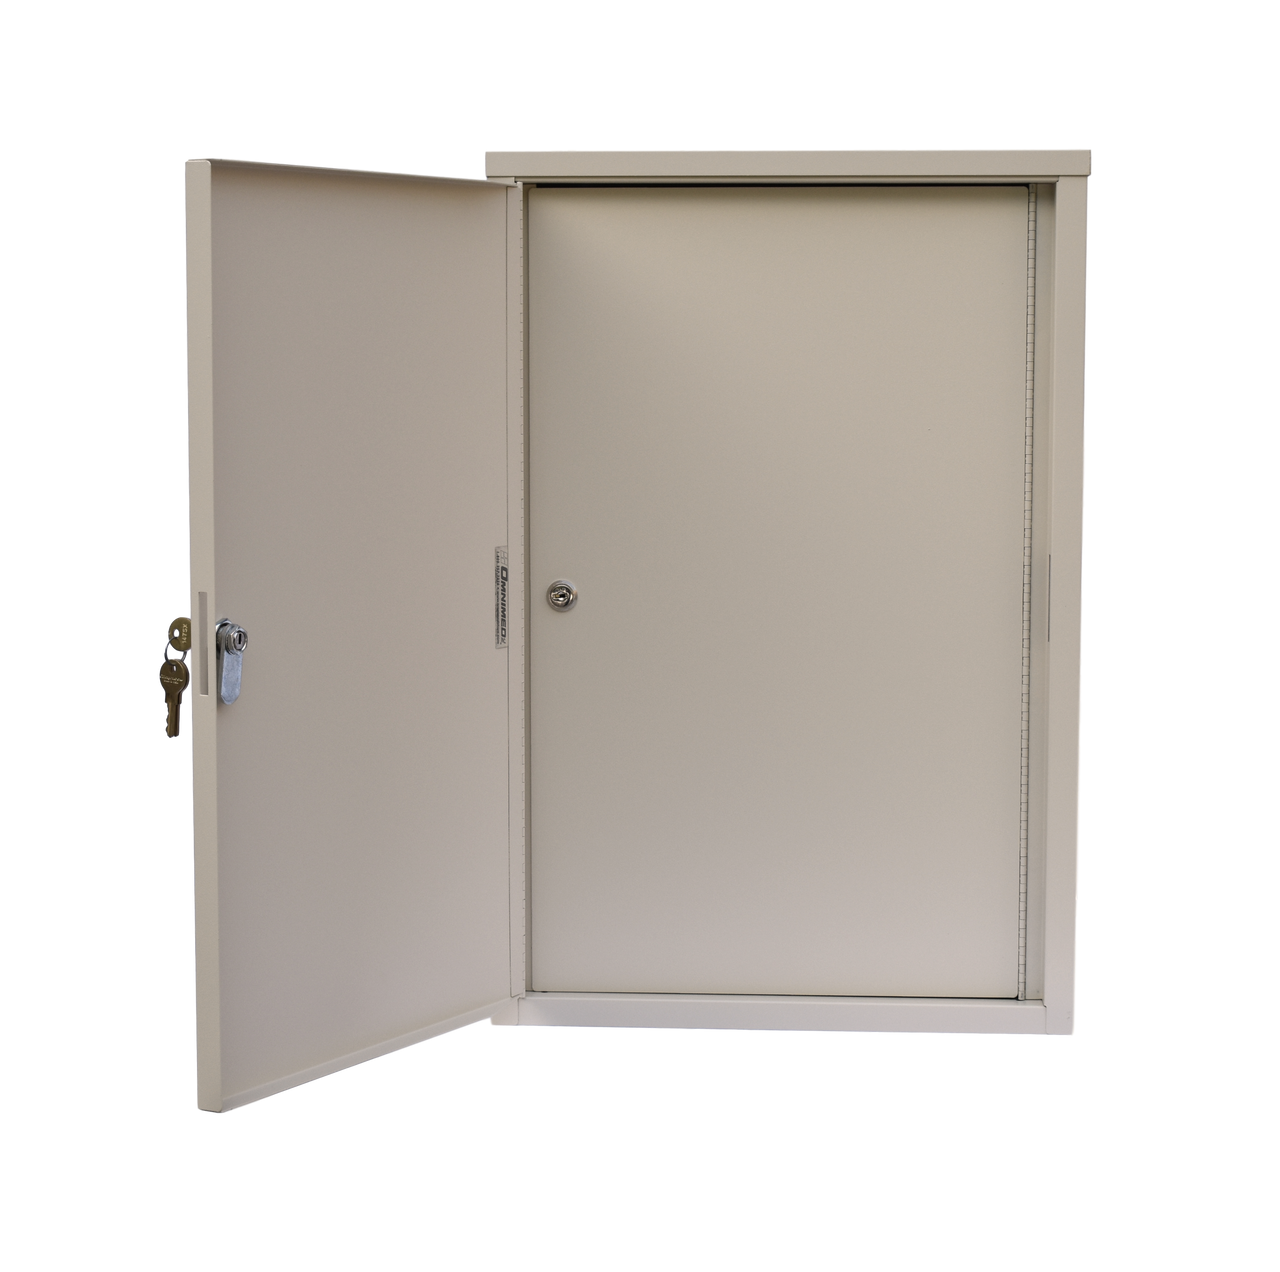 Economy Double Door Narcotic Cabinet (24”H x 16”W x 8”D)